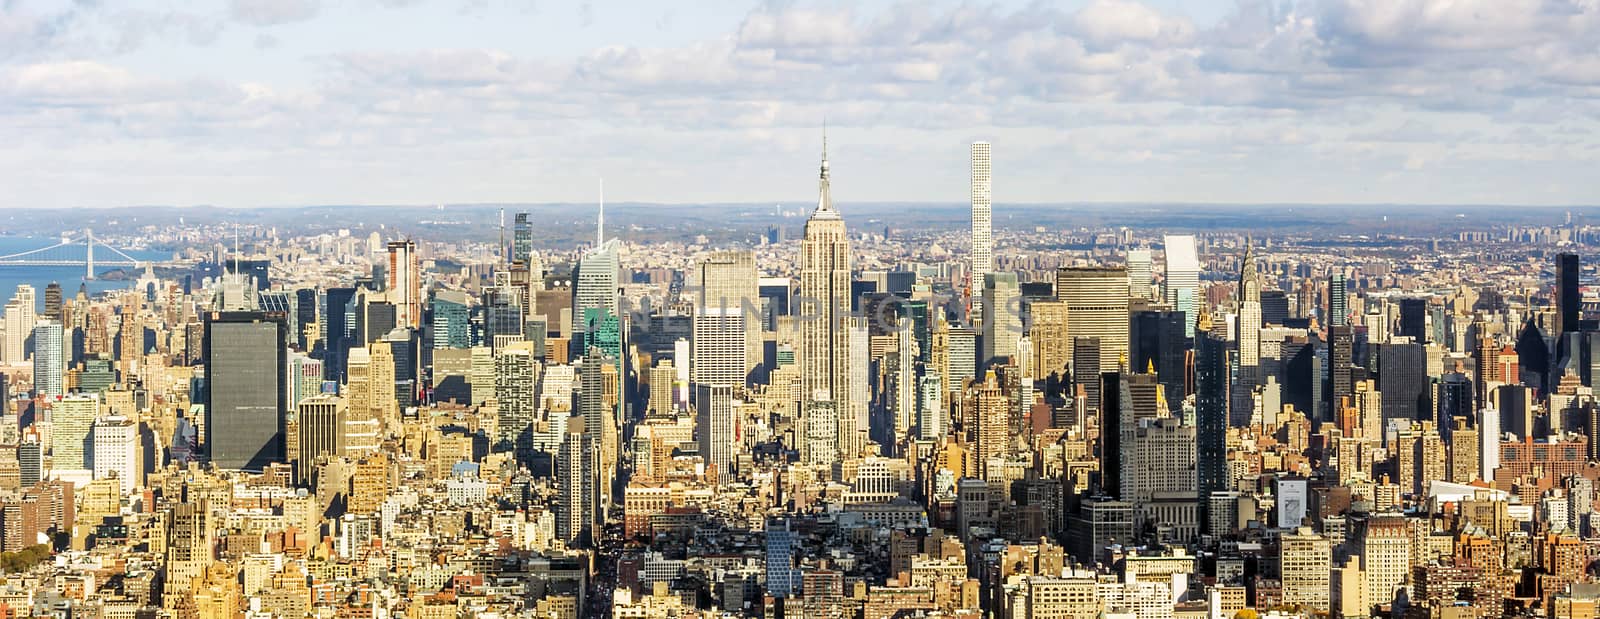 New York skyline from high observation deck